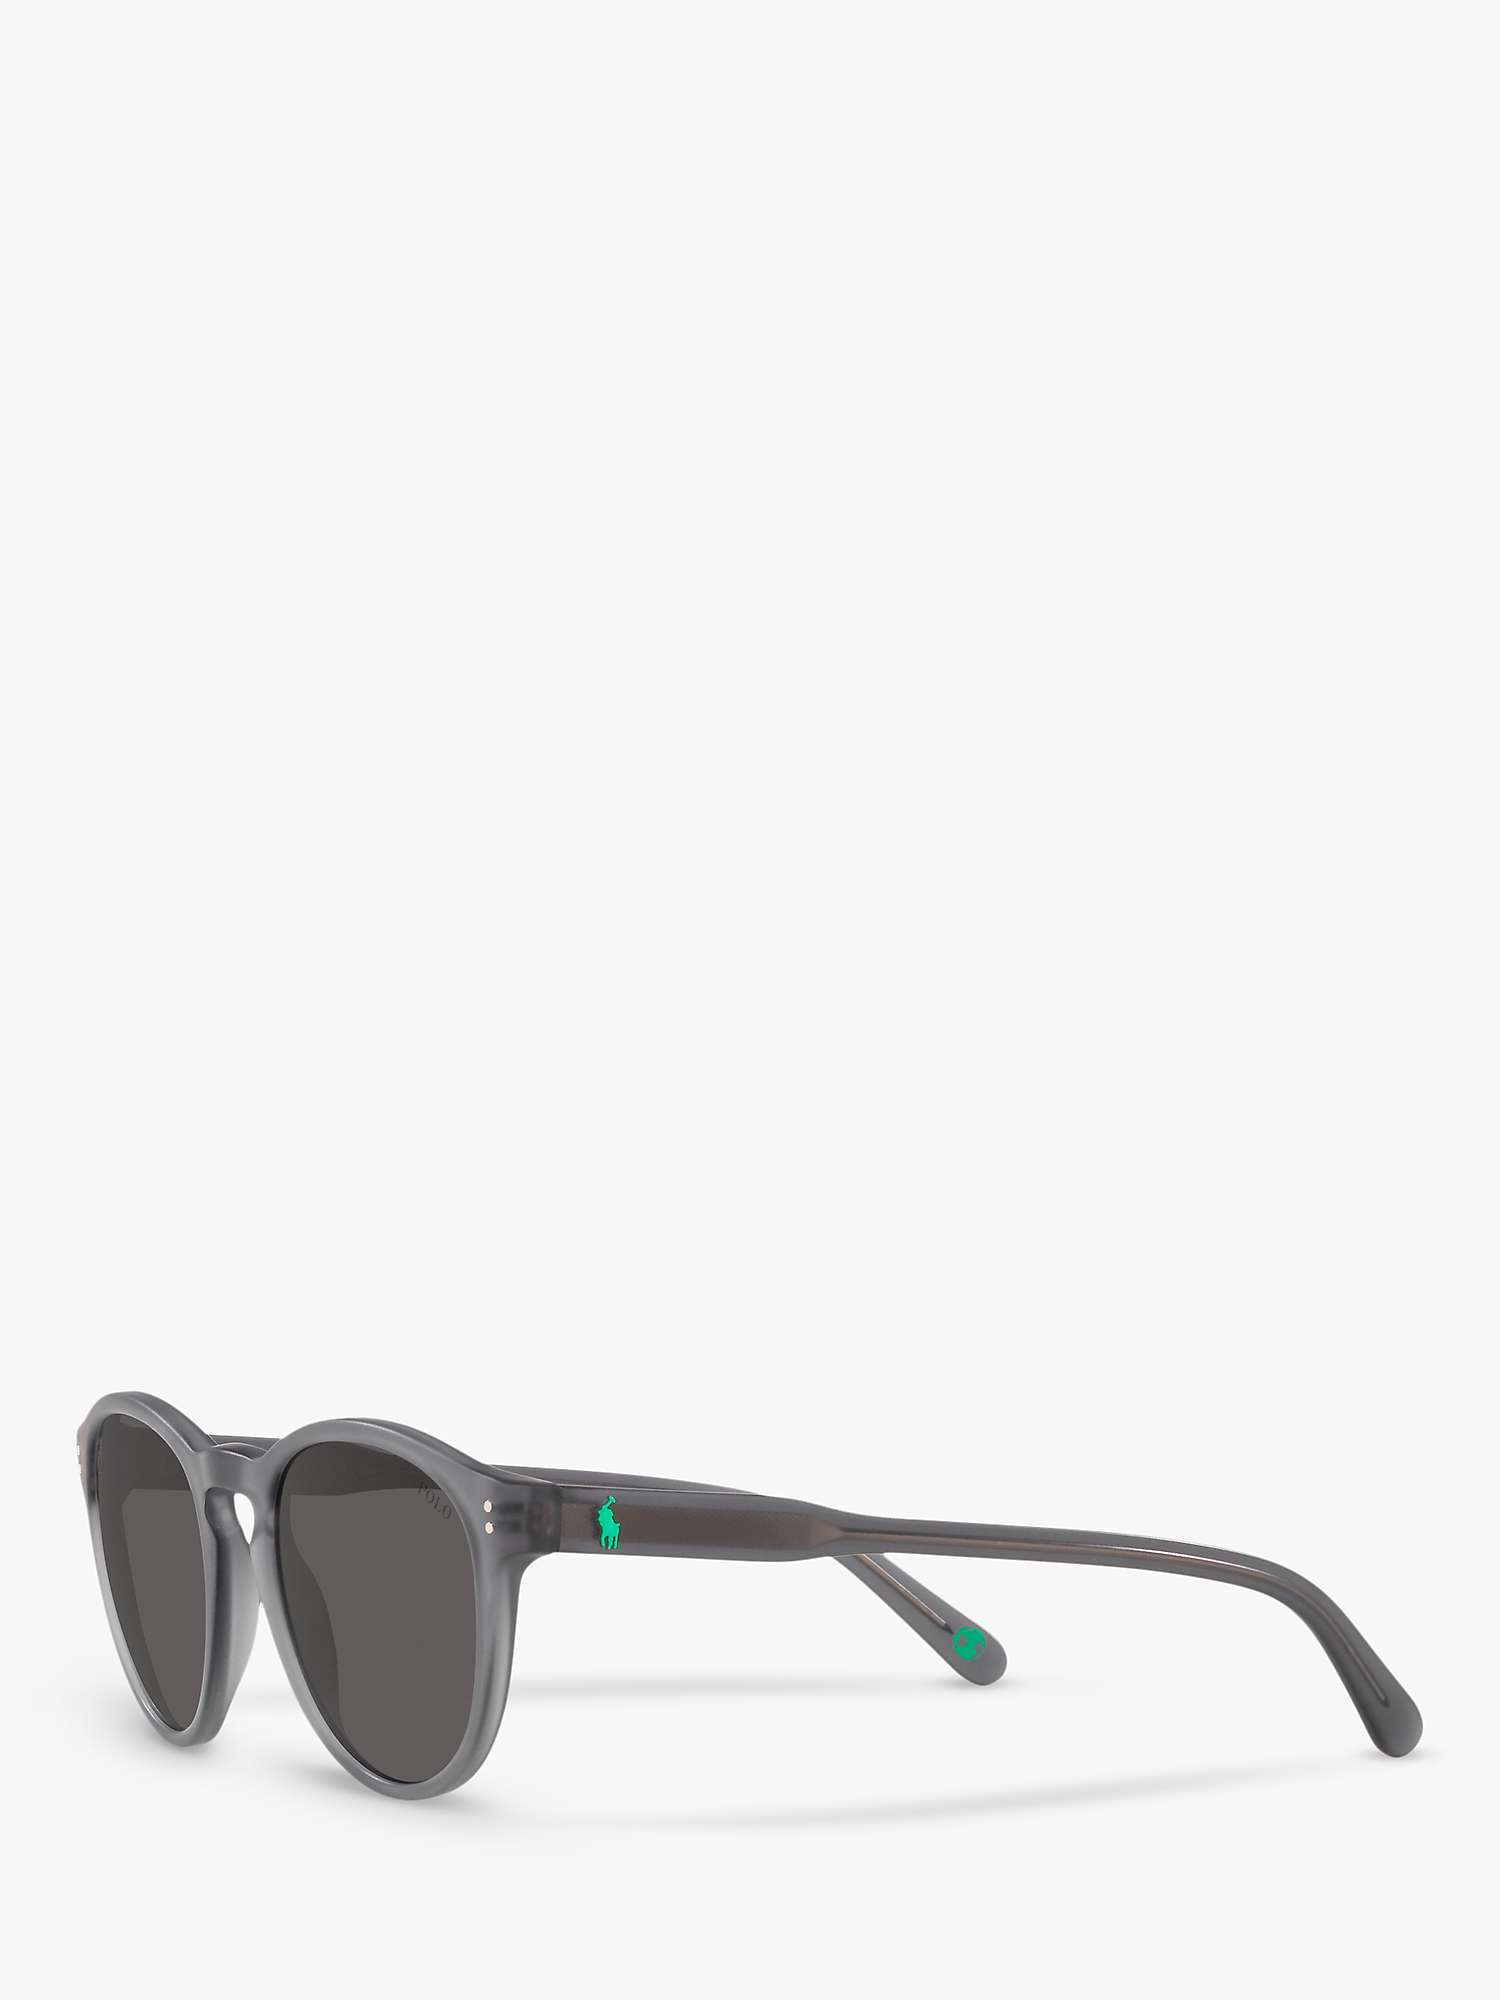 Buy Ralph Lauren PH4172 Men's Oval Sunglasses Online at johnlewis.com